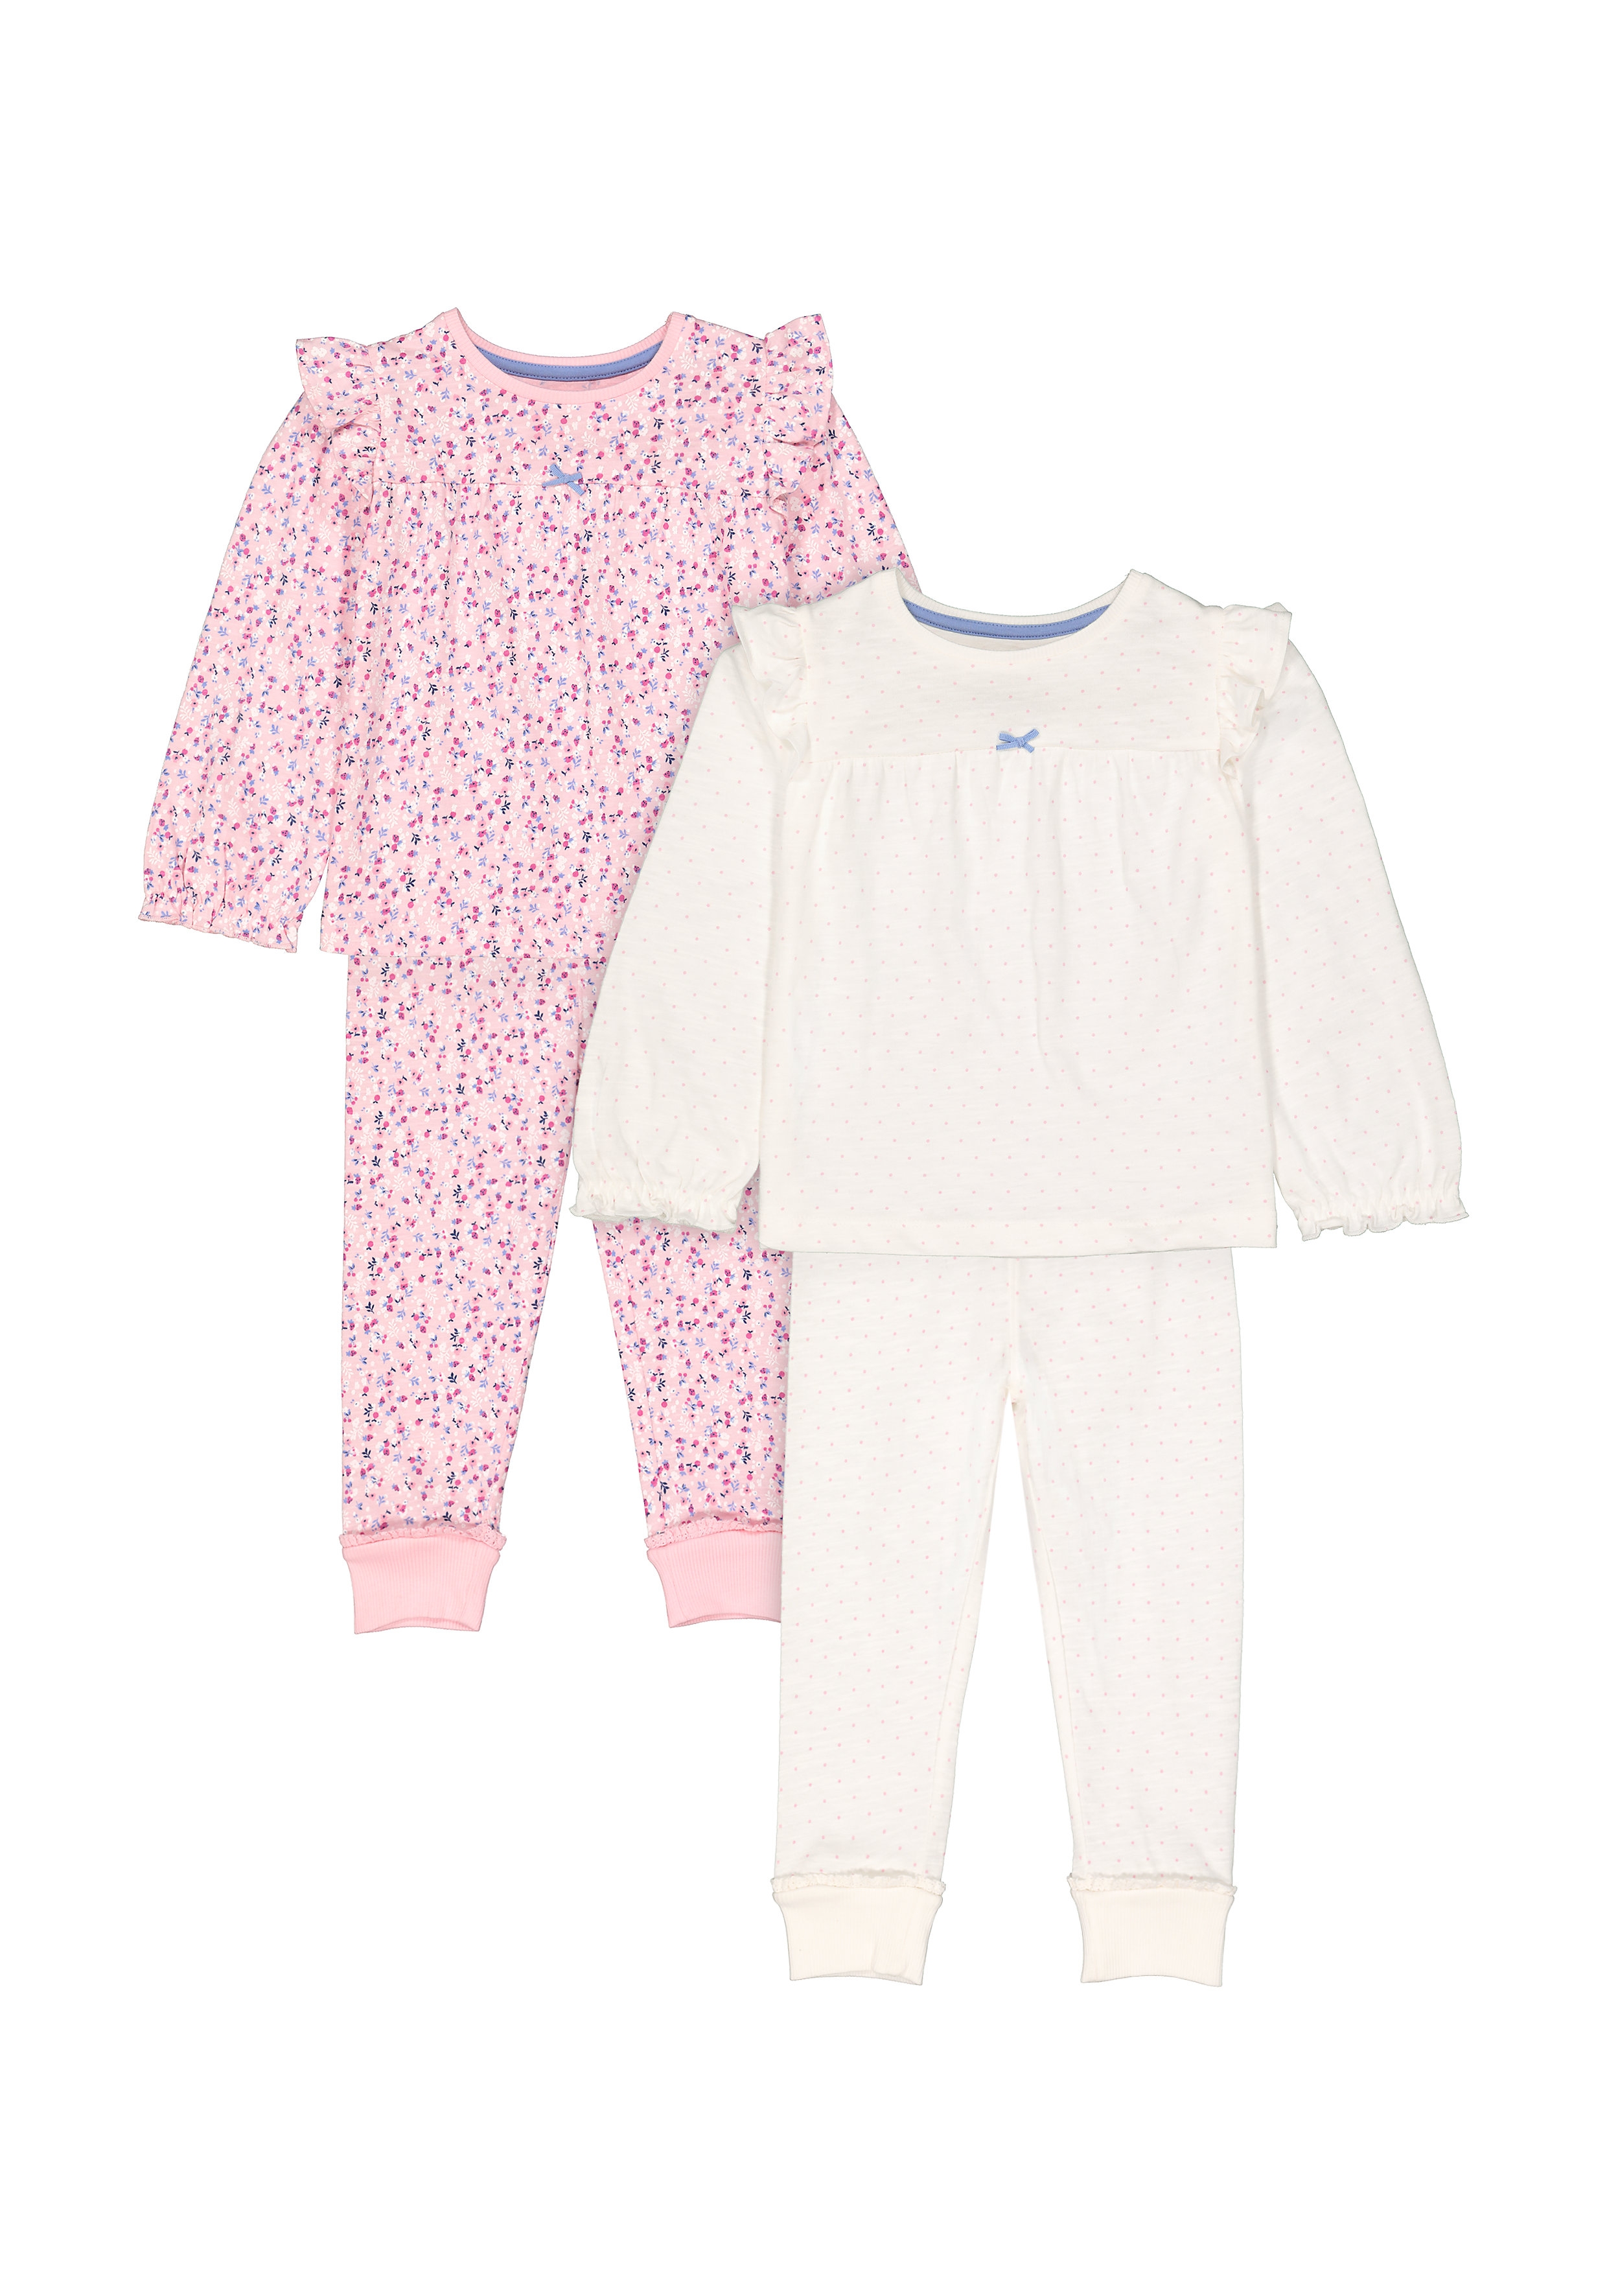 Mothercare | Girls Full Sleeves Pyjama Set Polka Dot And Floral Print - Pack Of 2 - Pink Cream